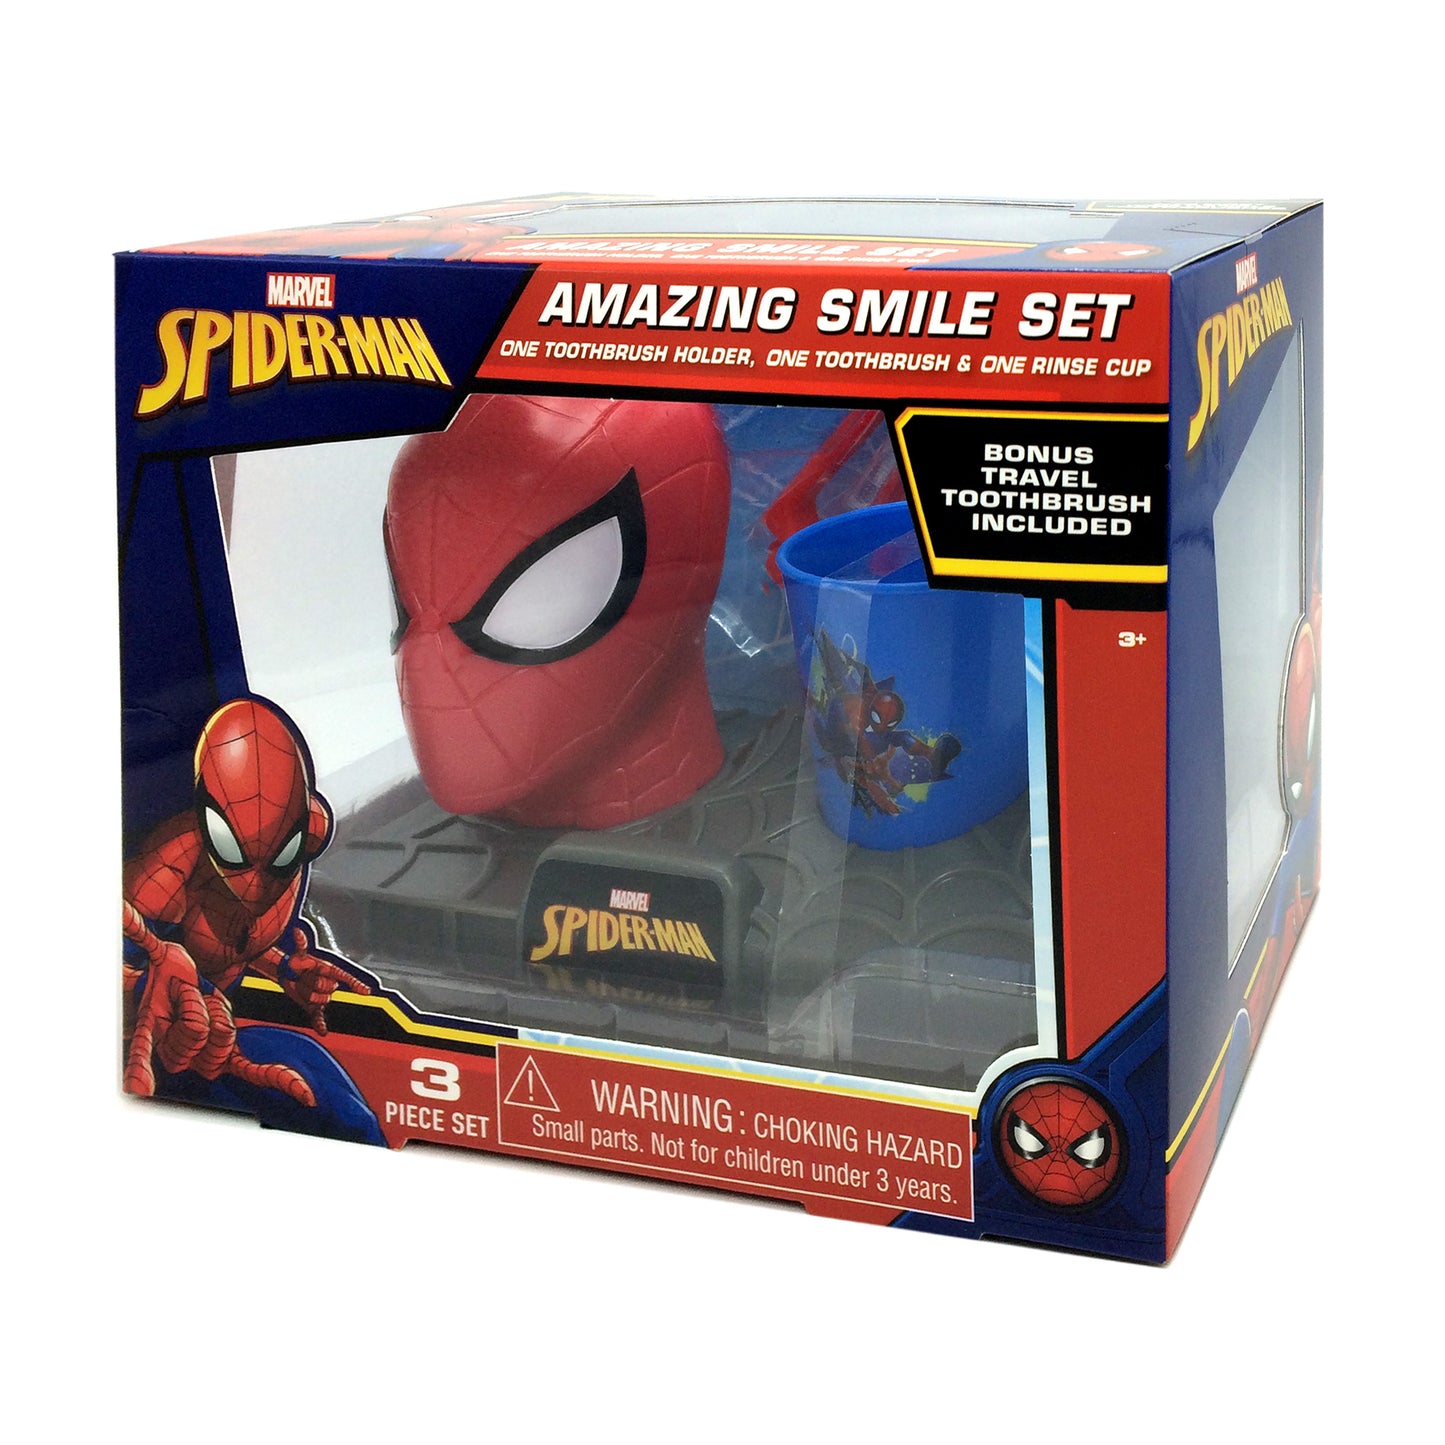 Spiderman Great Smile Toothbrush Set, Toothbrush Holder, Toothbrush & Rinse Cup